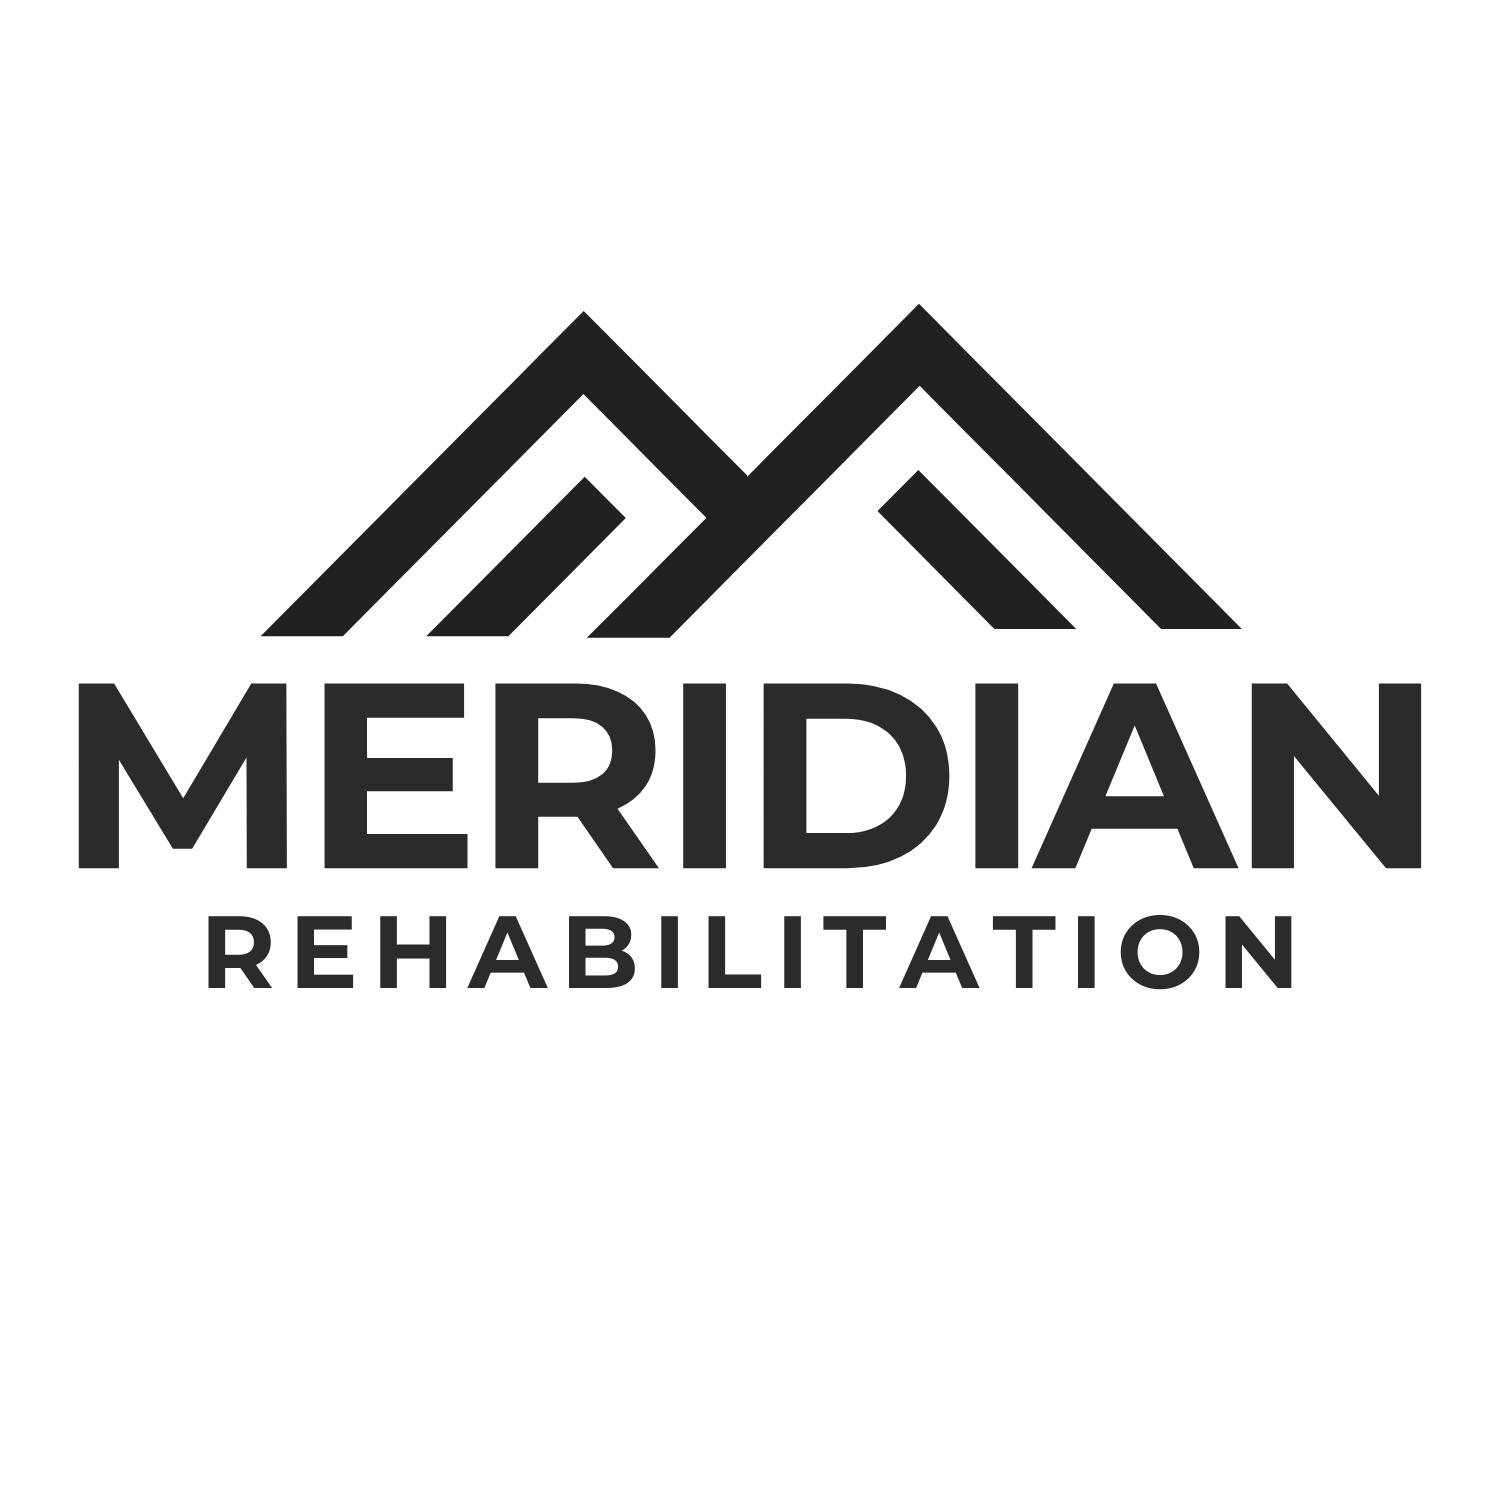 Meridian Rehabilitation logo